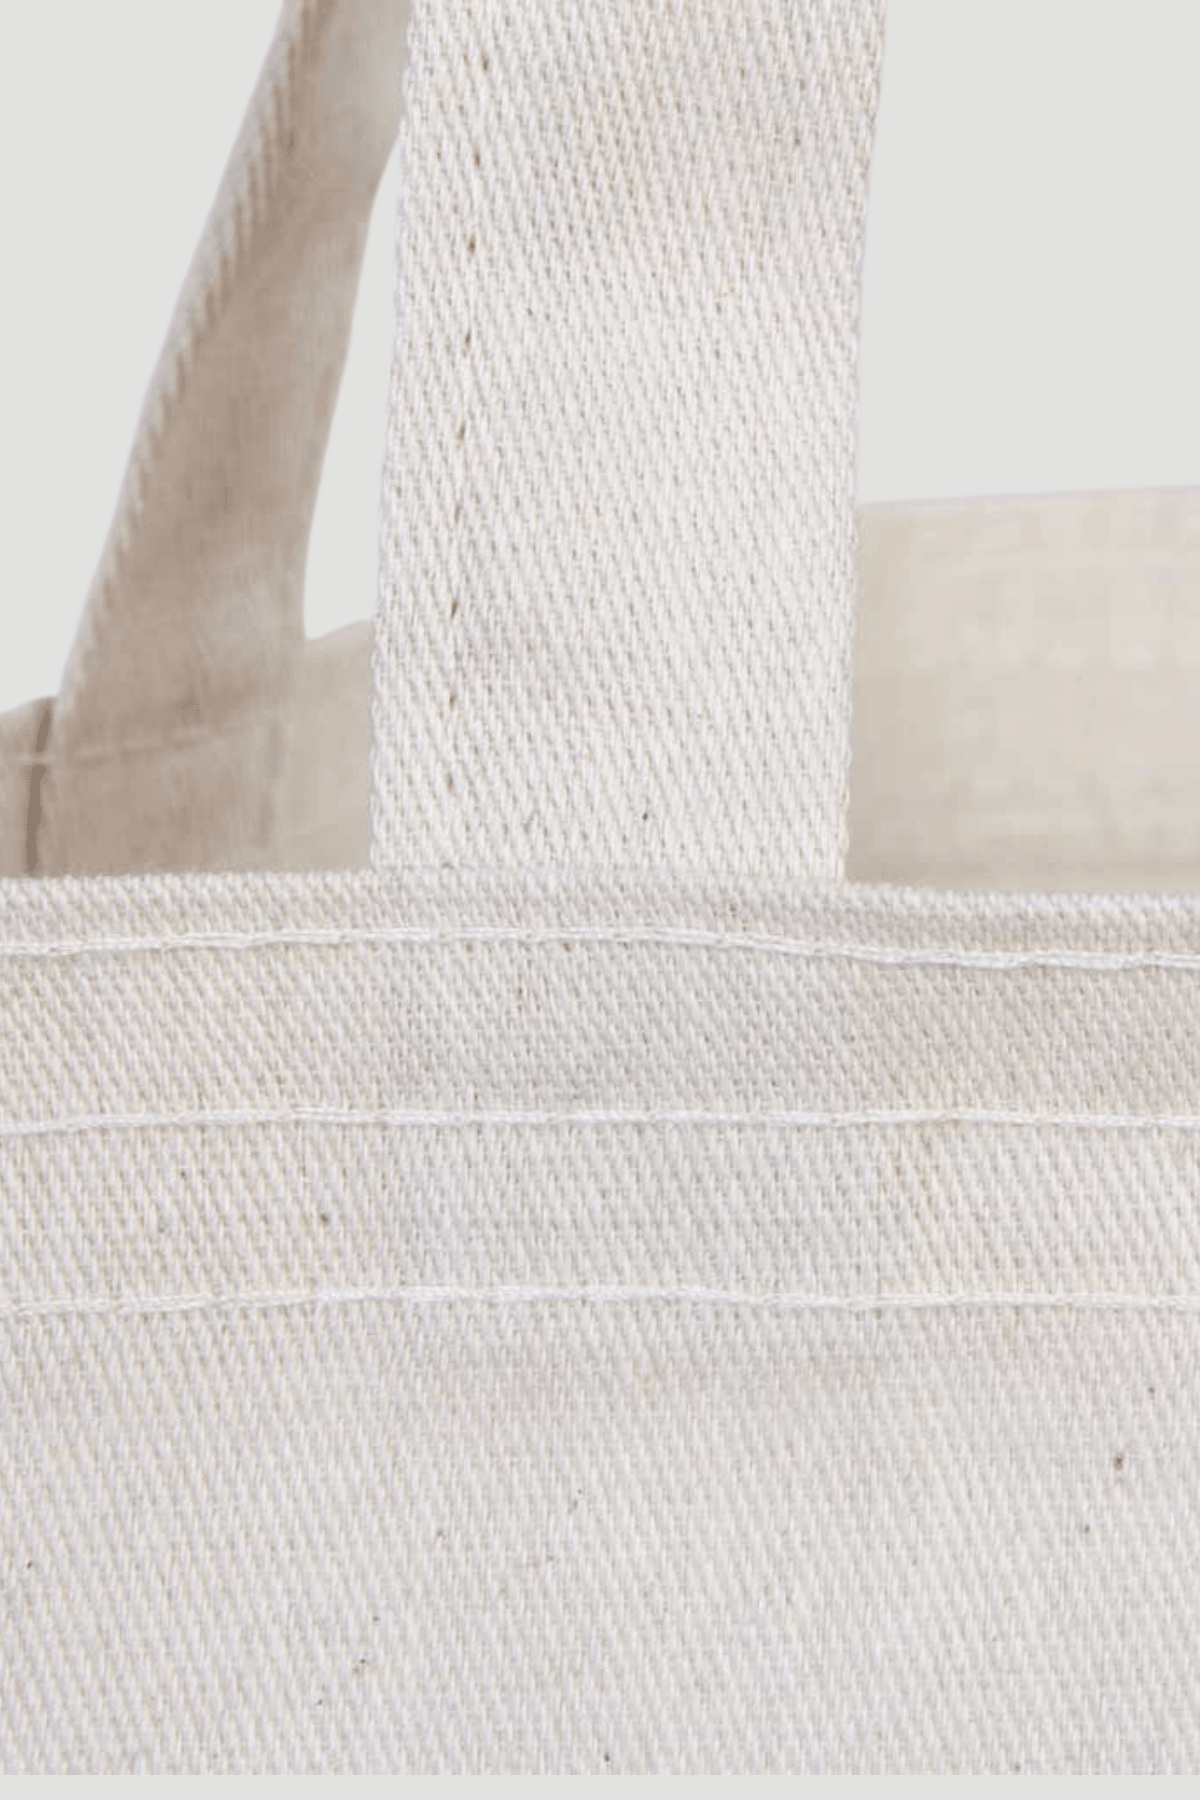 Mooncorn Printed Cloth Bag